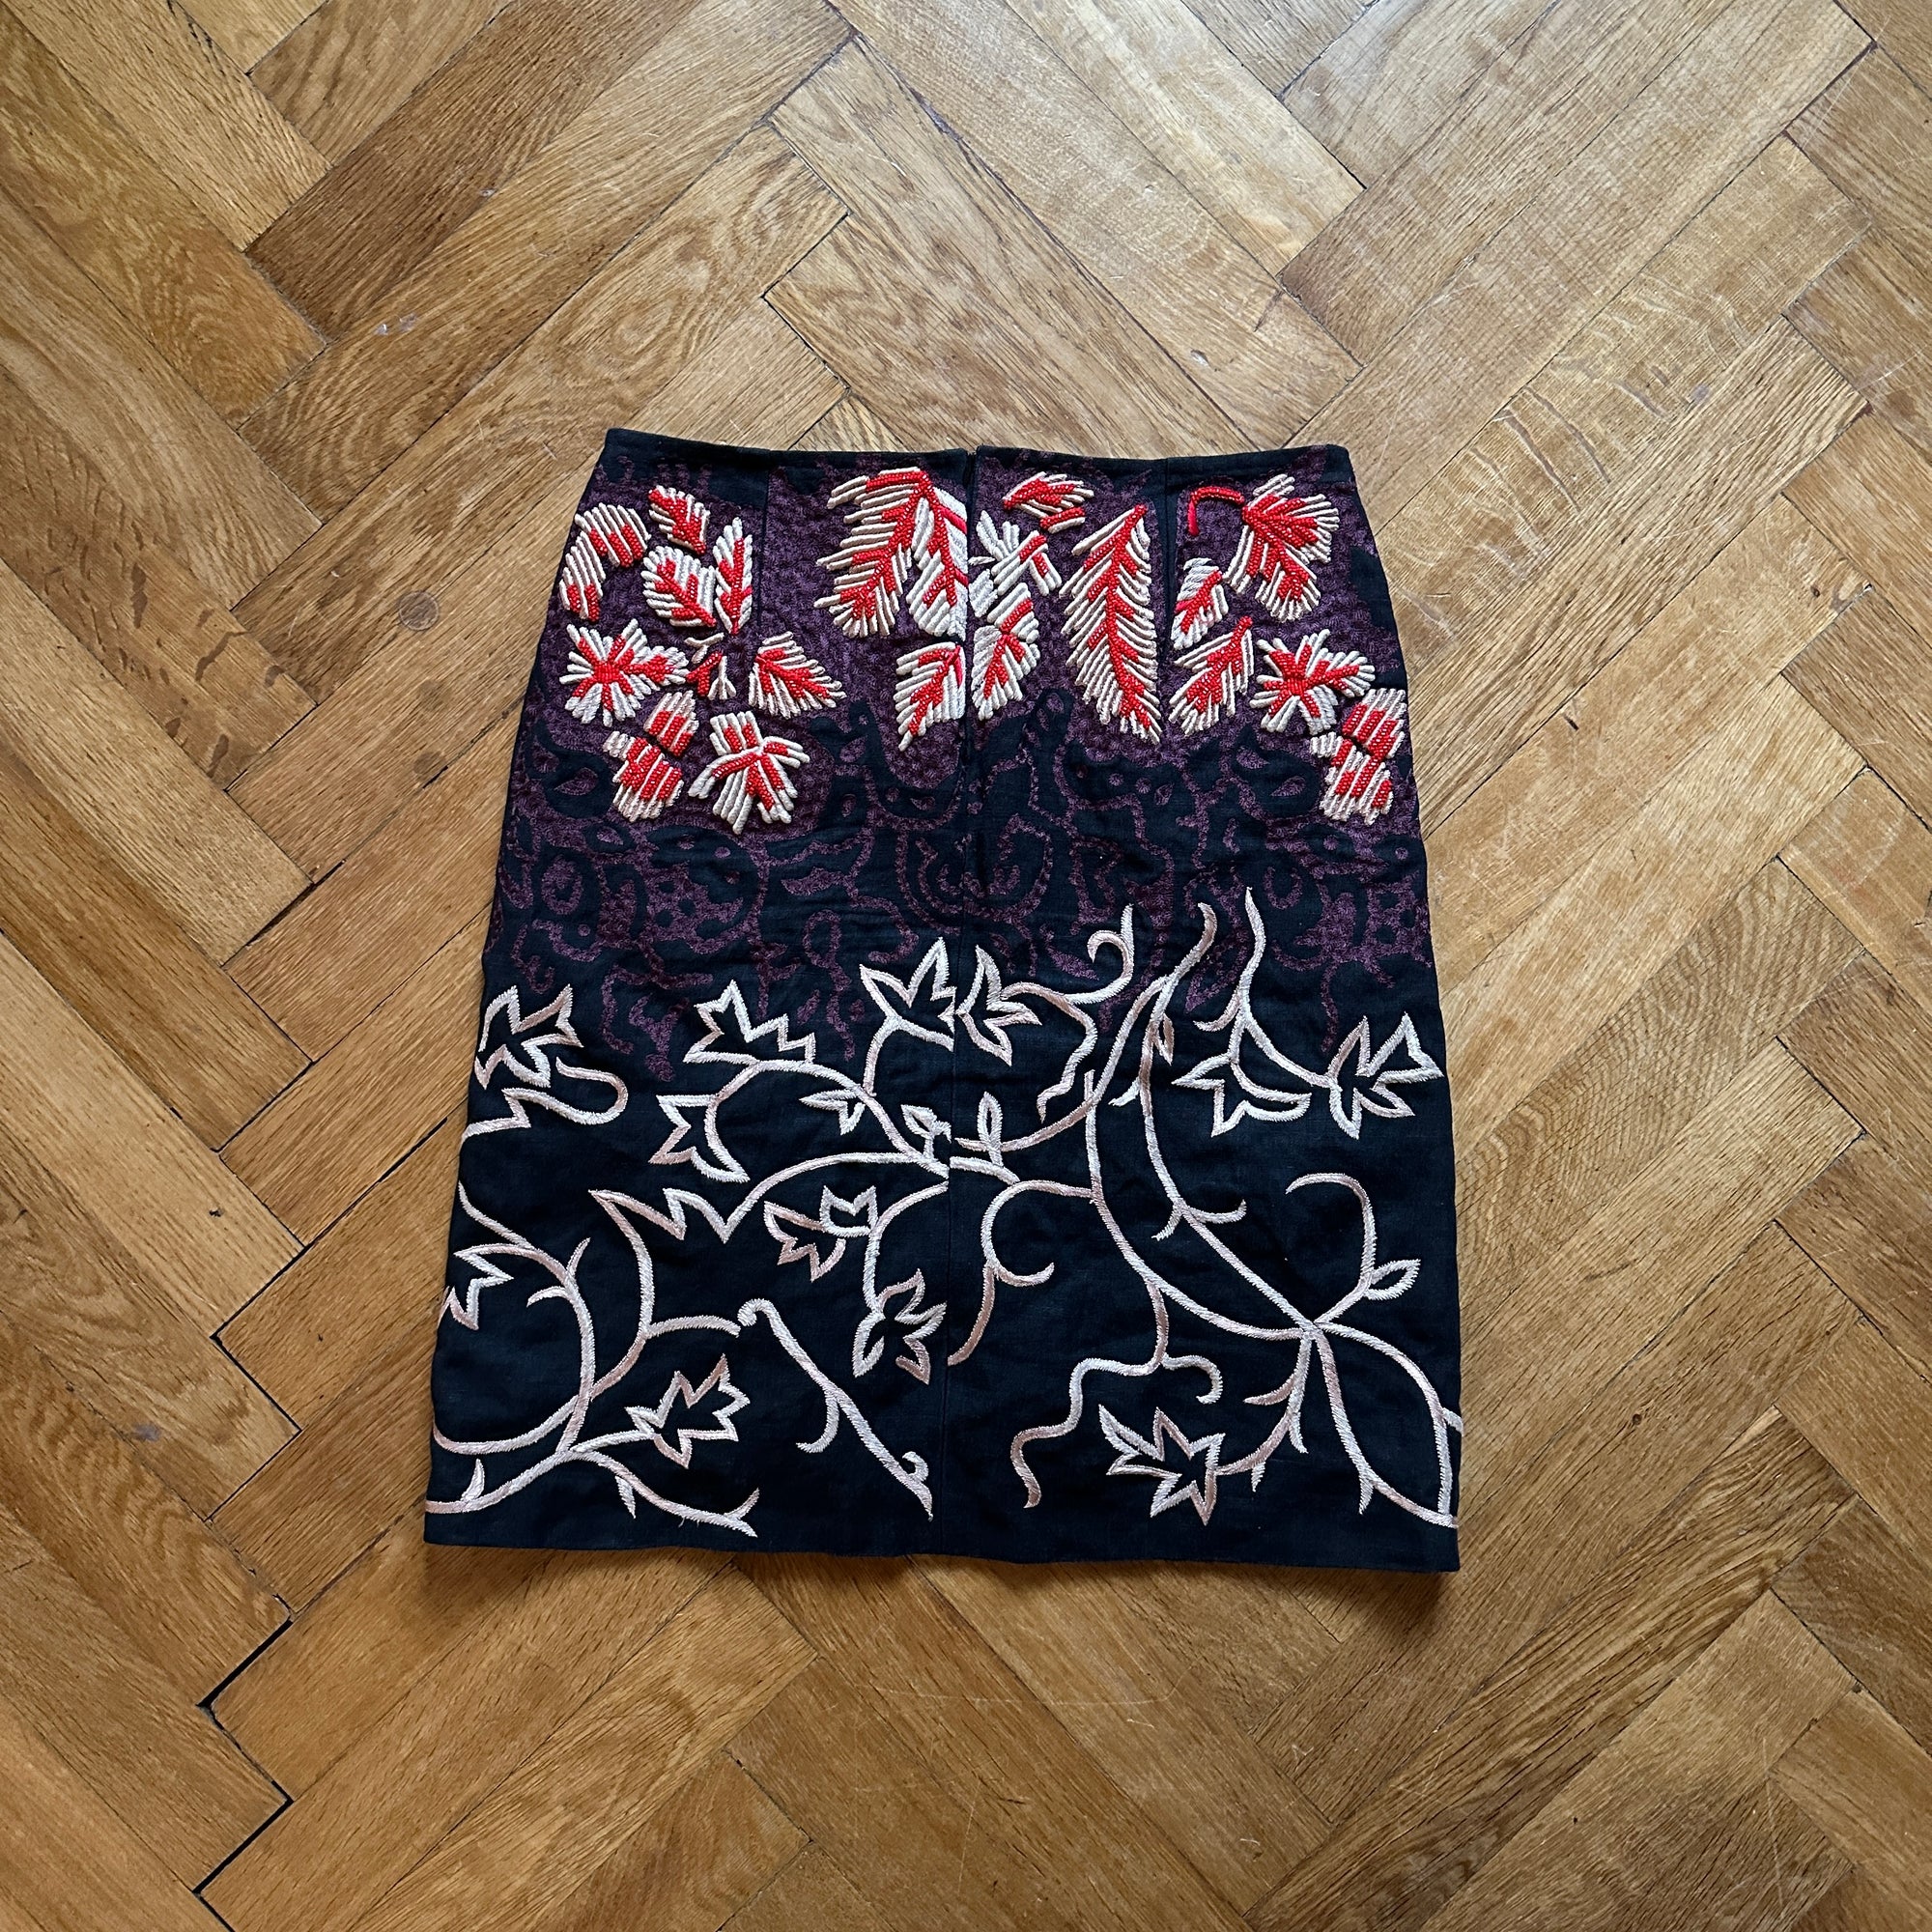 Dries Van Noten Floral Embellished Skirt